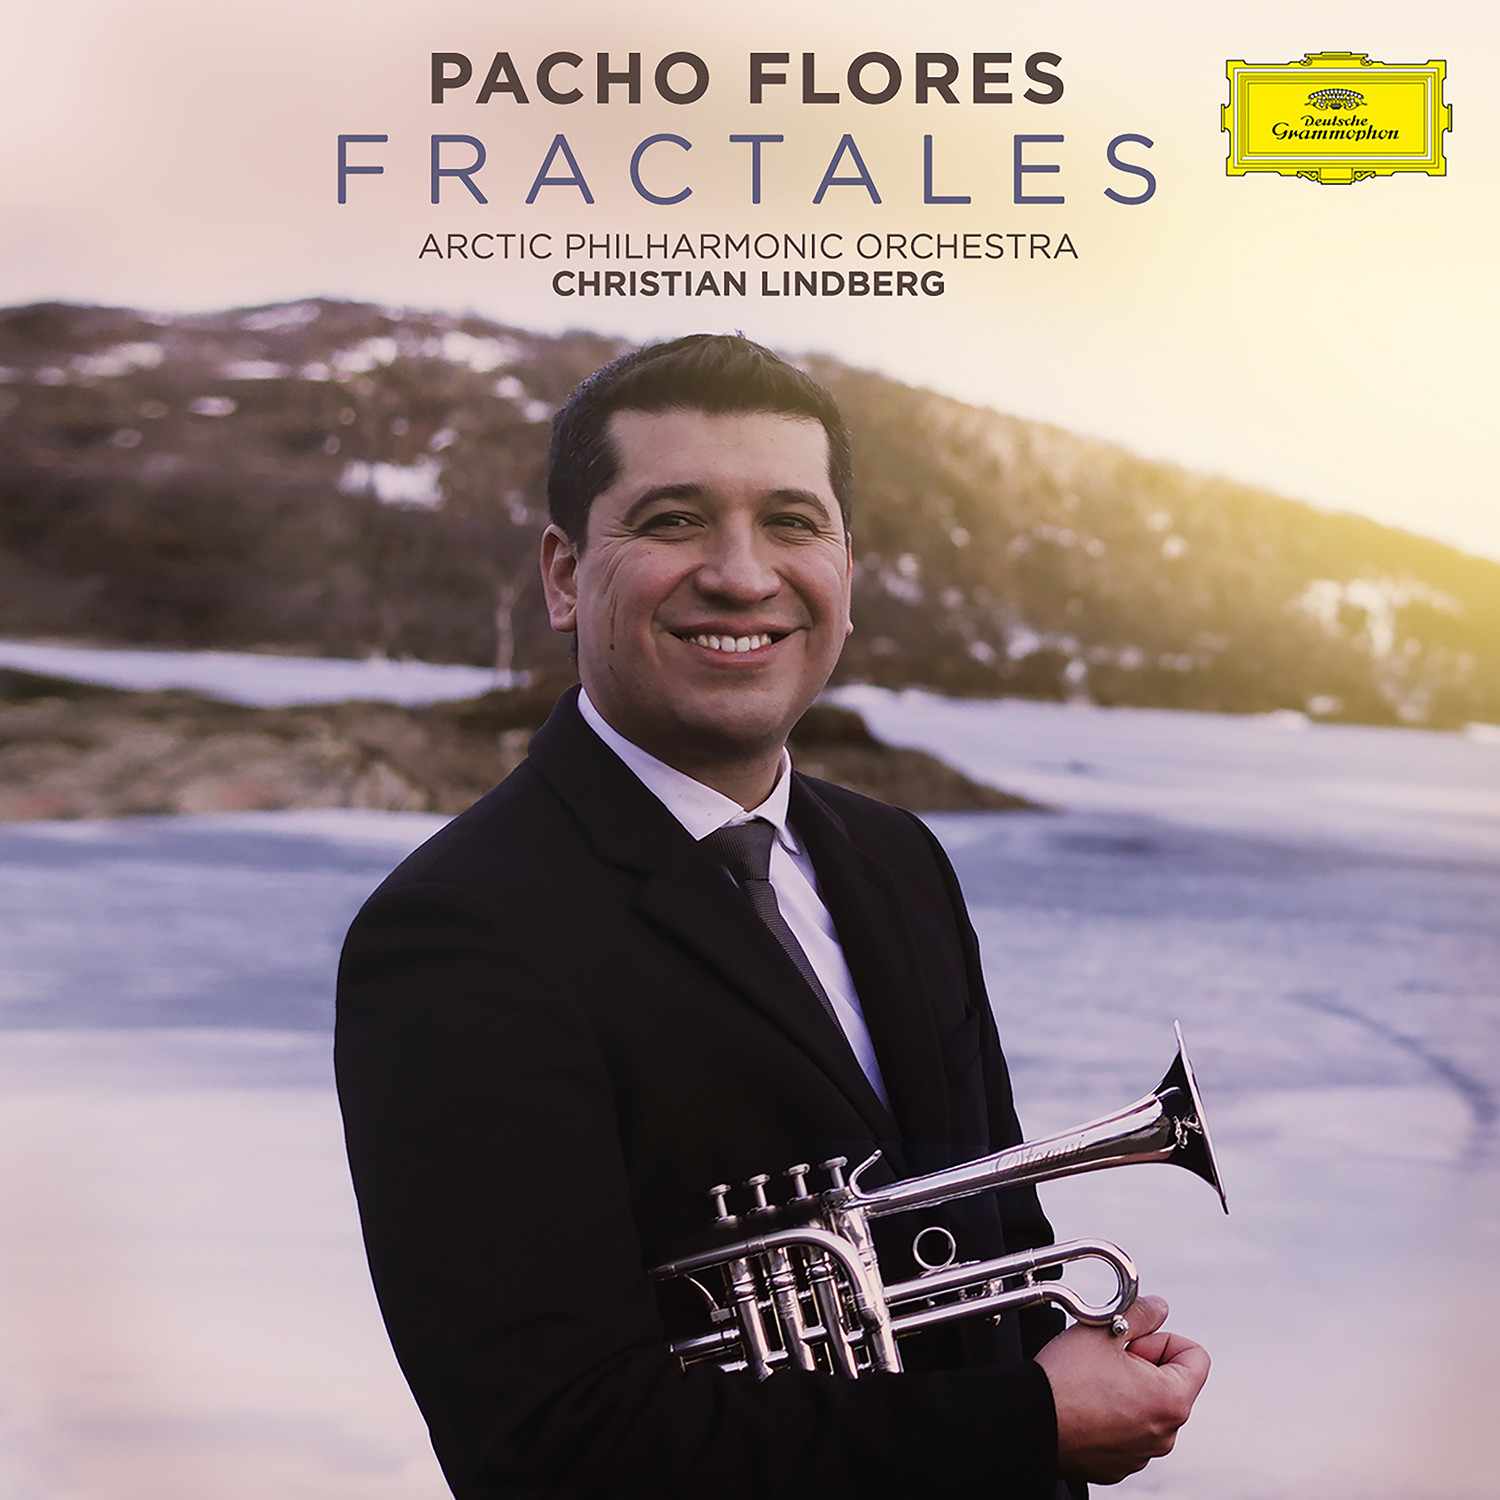 FRACTALES, new Pacho Flores’ recording for DG